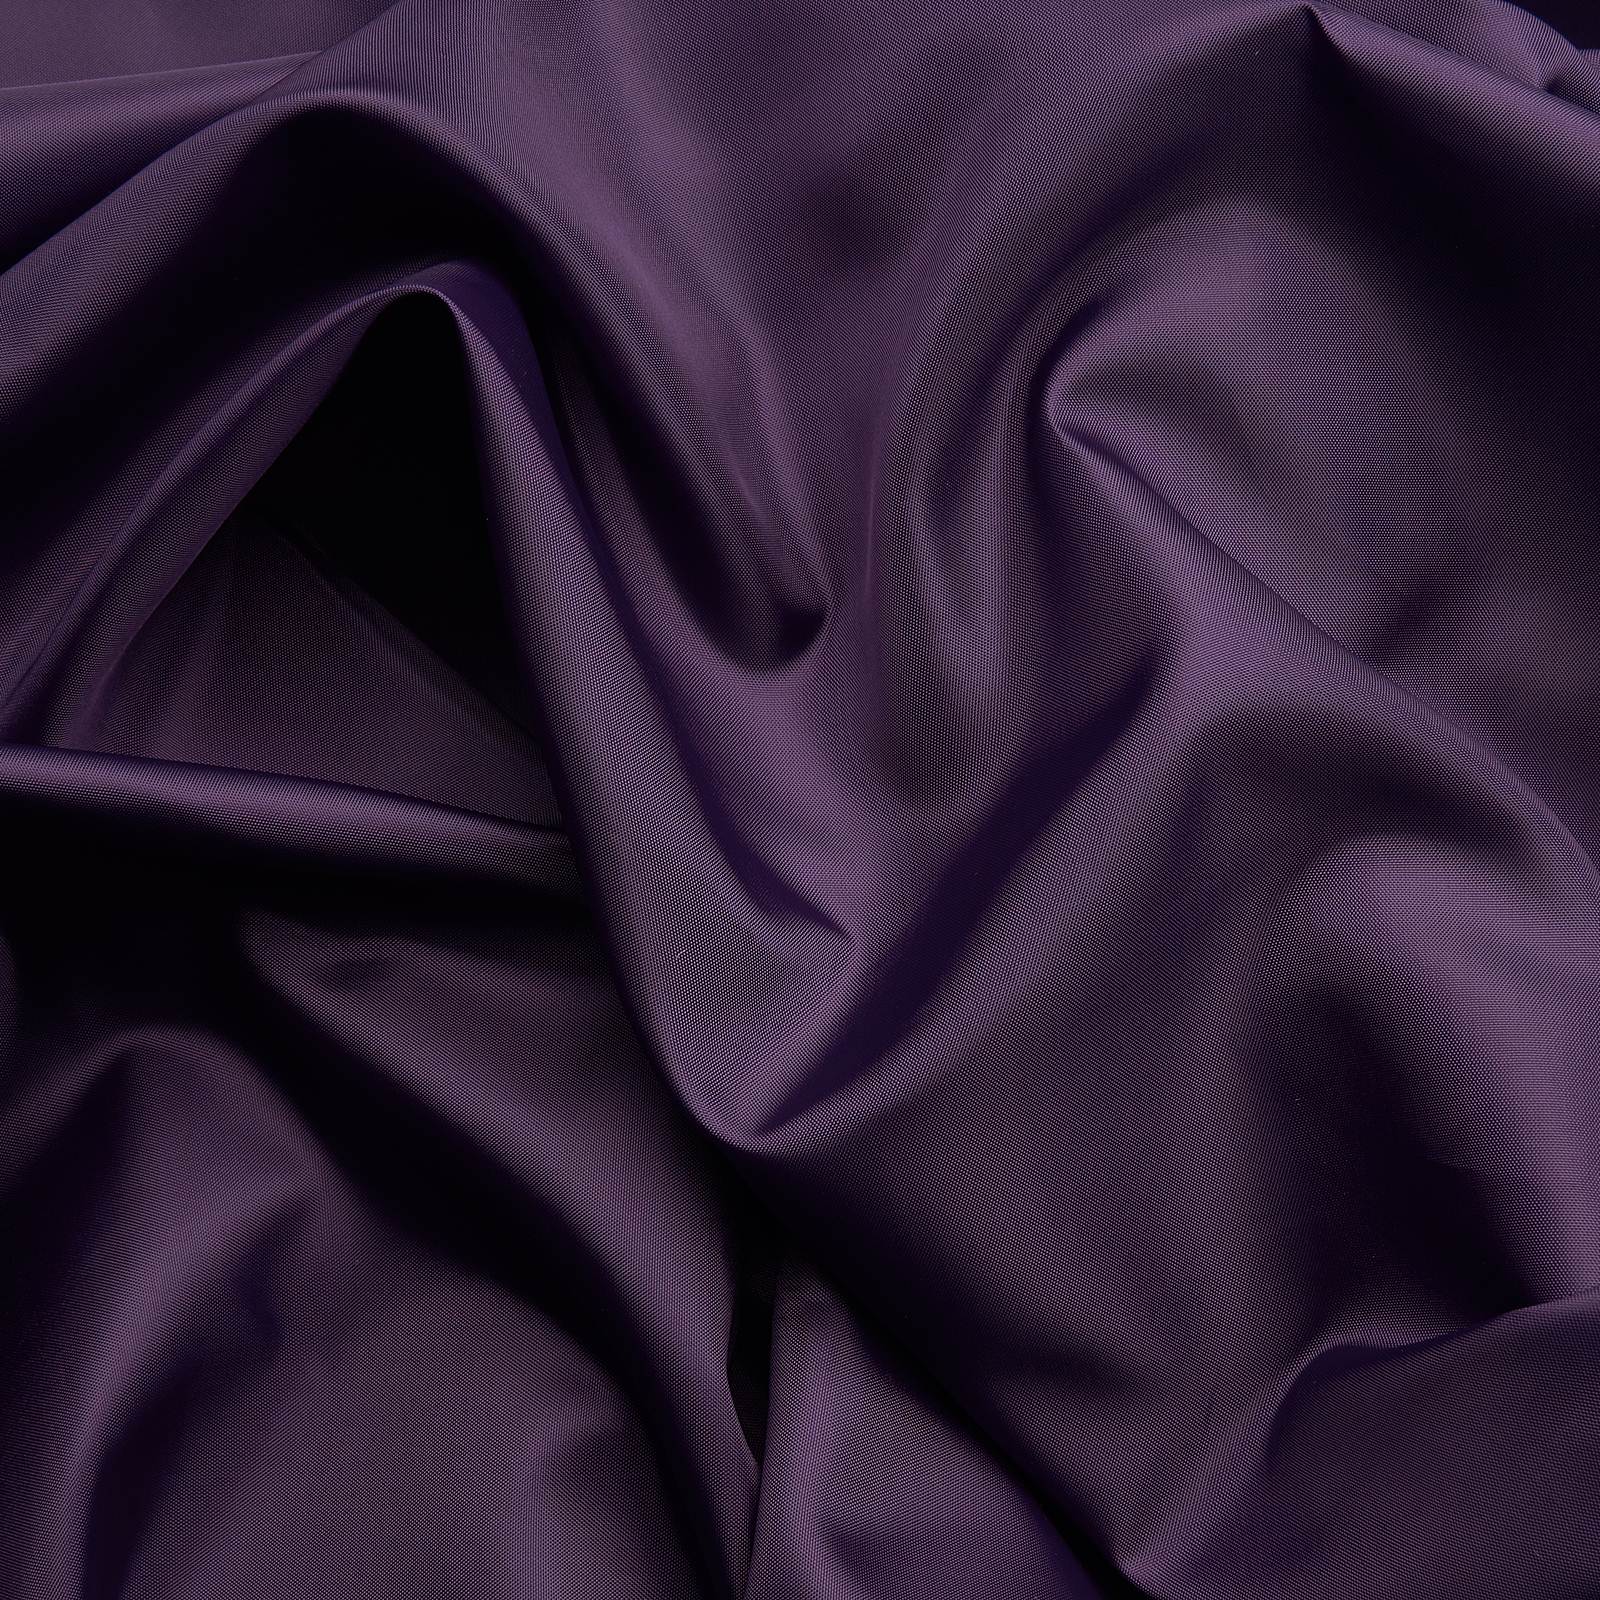 Dark Purple	